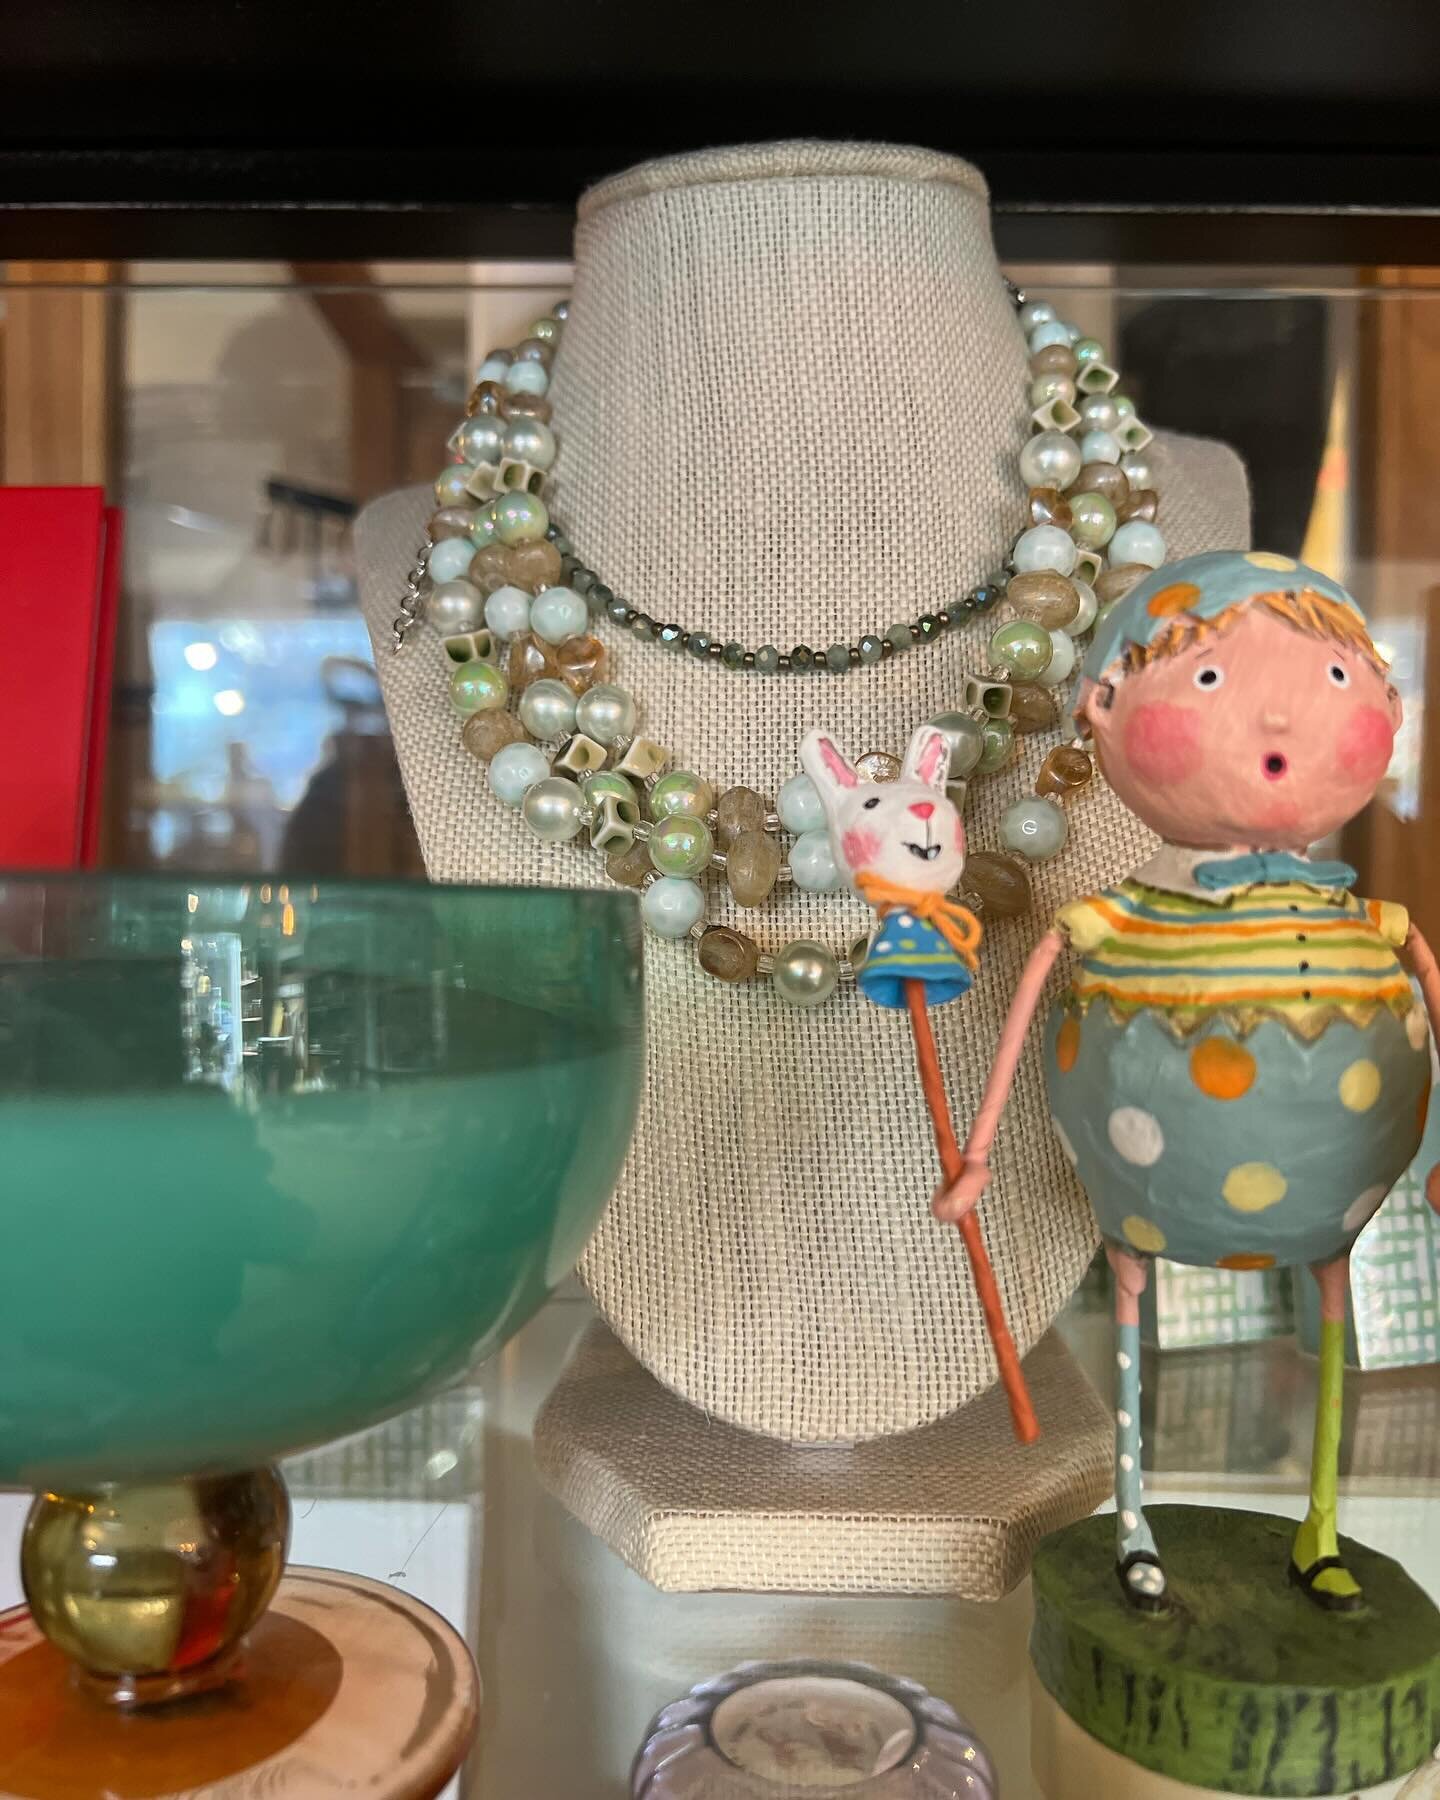 Jewelry, Lori Mitchell Easter figurine and candle. Something for everyone at The Cottage. Open today 11-5. 914-763-1310
#vintage #vintageshop #shoppoundridge #poundridge #bedford #northernwestchester #westchester #stamford #katonah #bekind #smile #sh